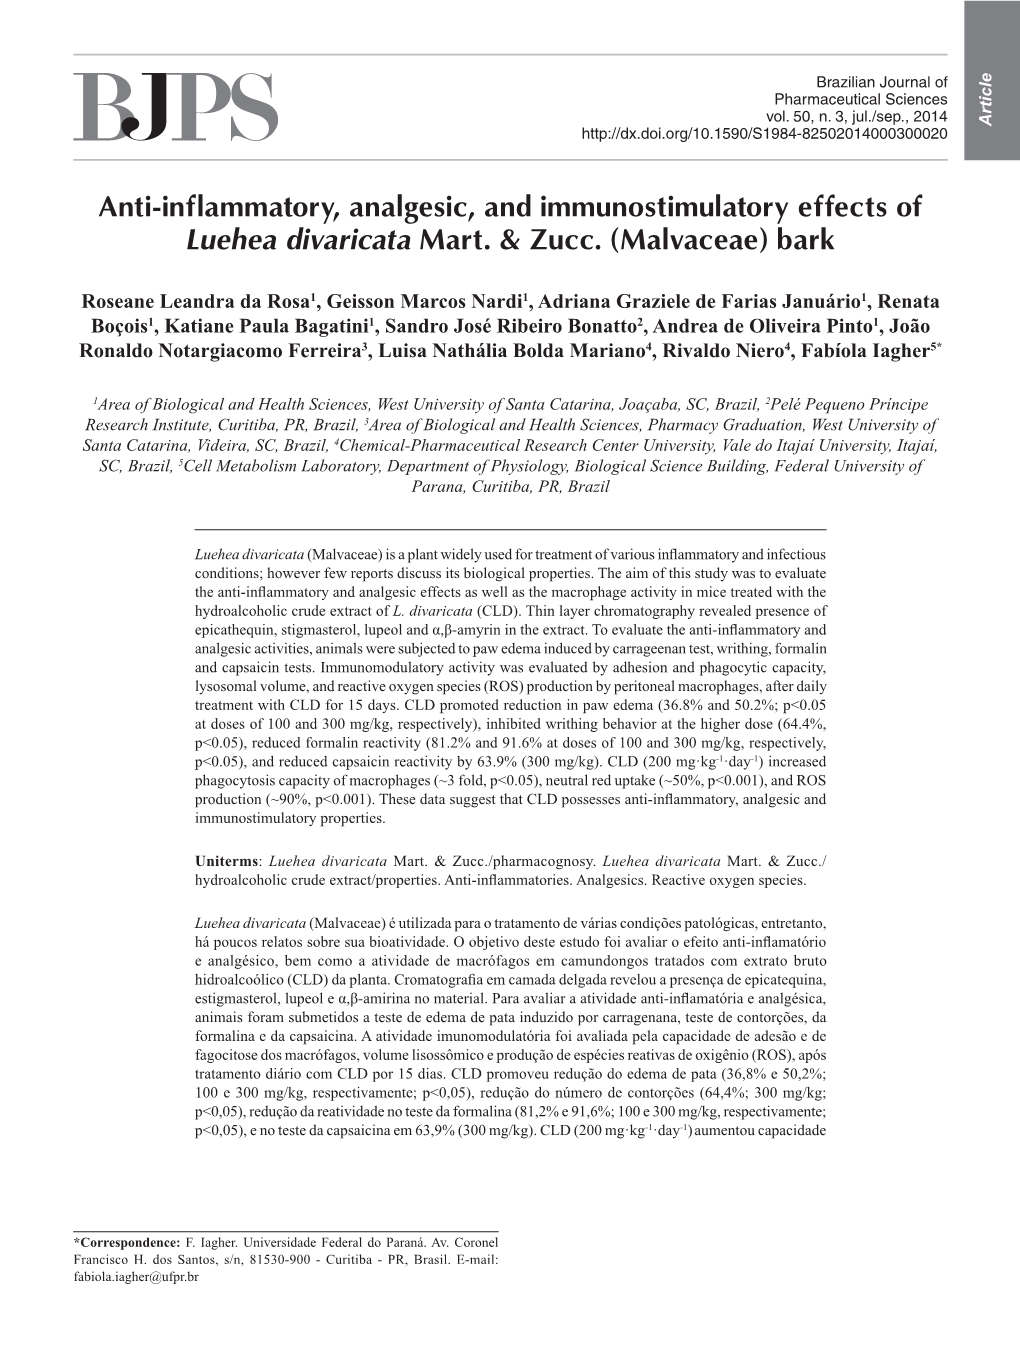 Anti-Inflammatory, Analgesic, and Immunostimulatory Effects of Luehea Divaricata Mart